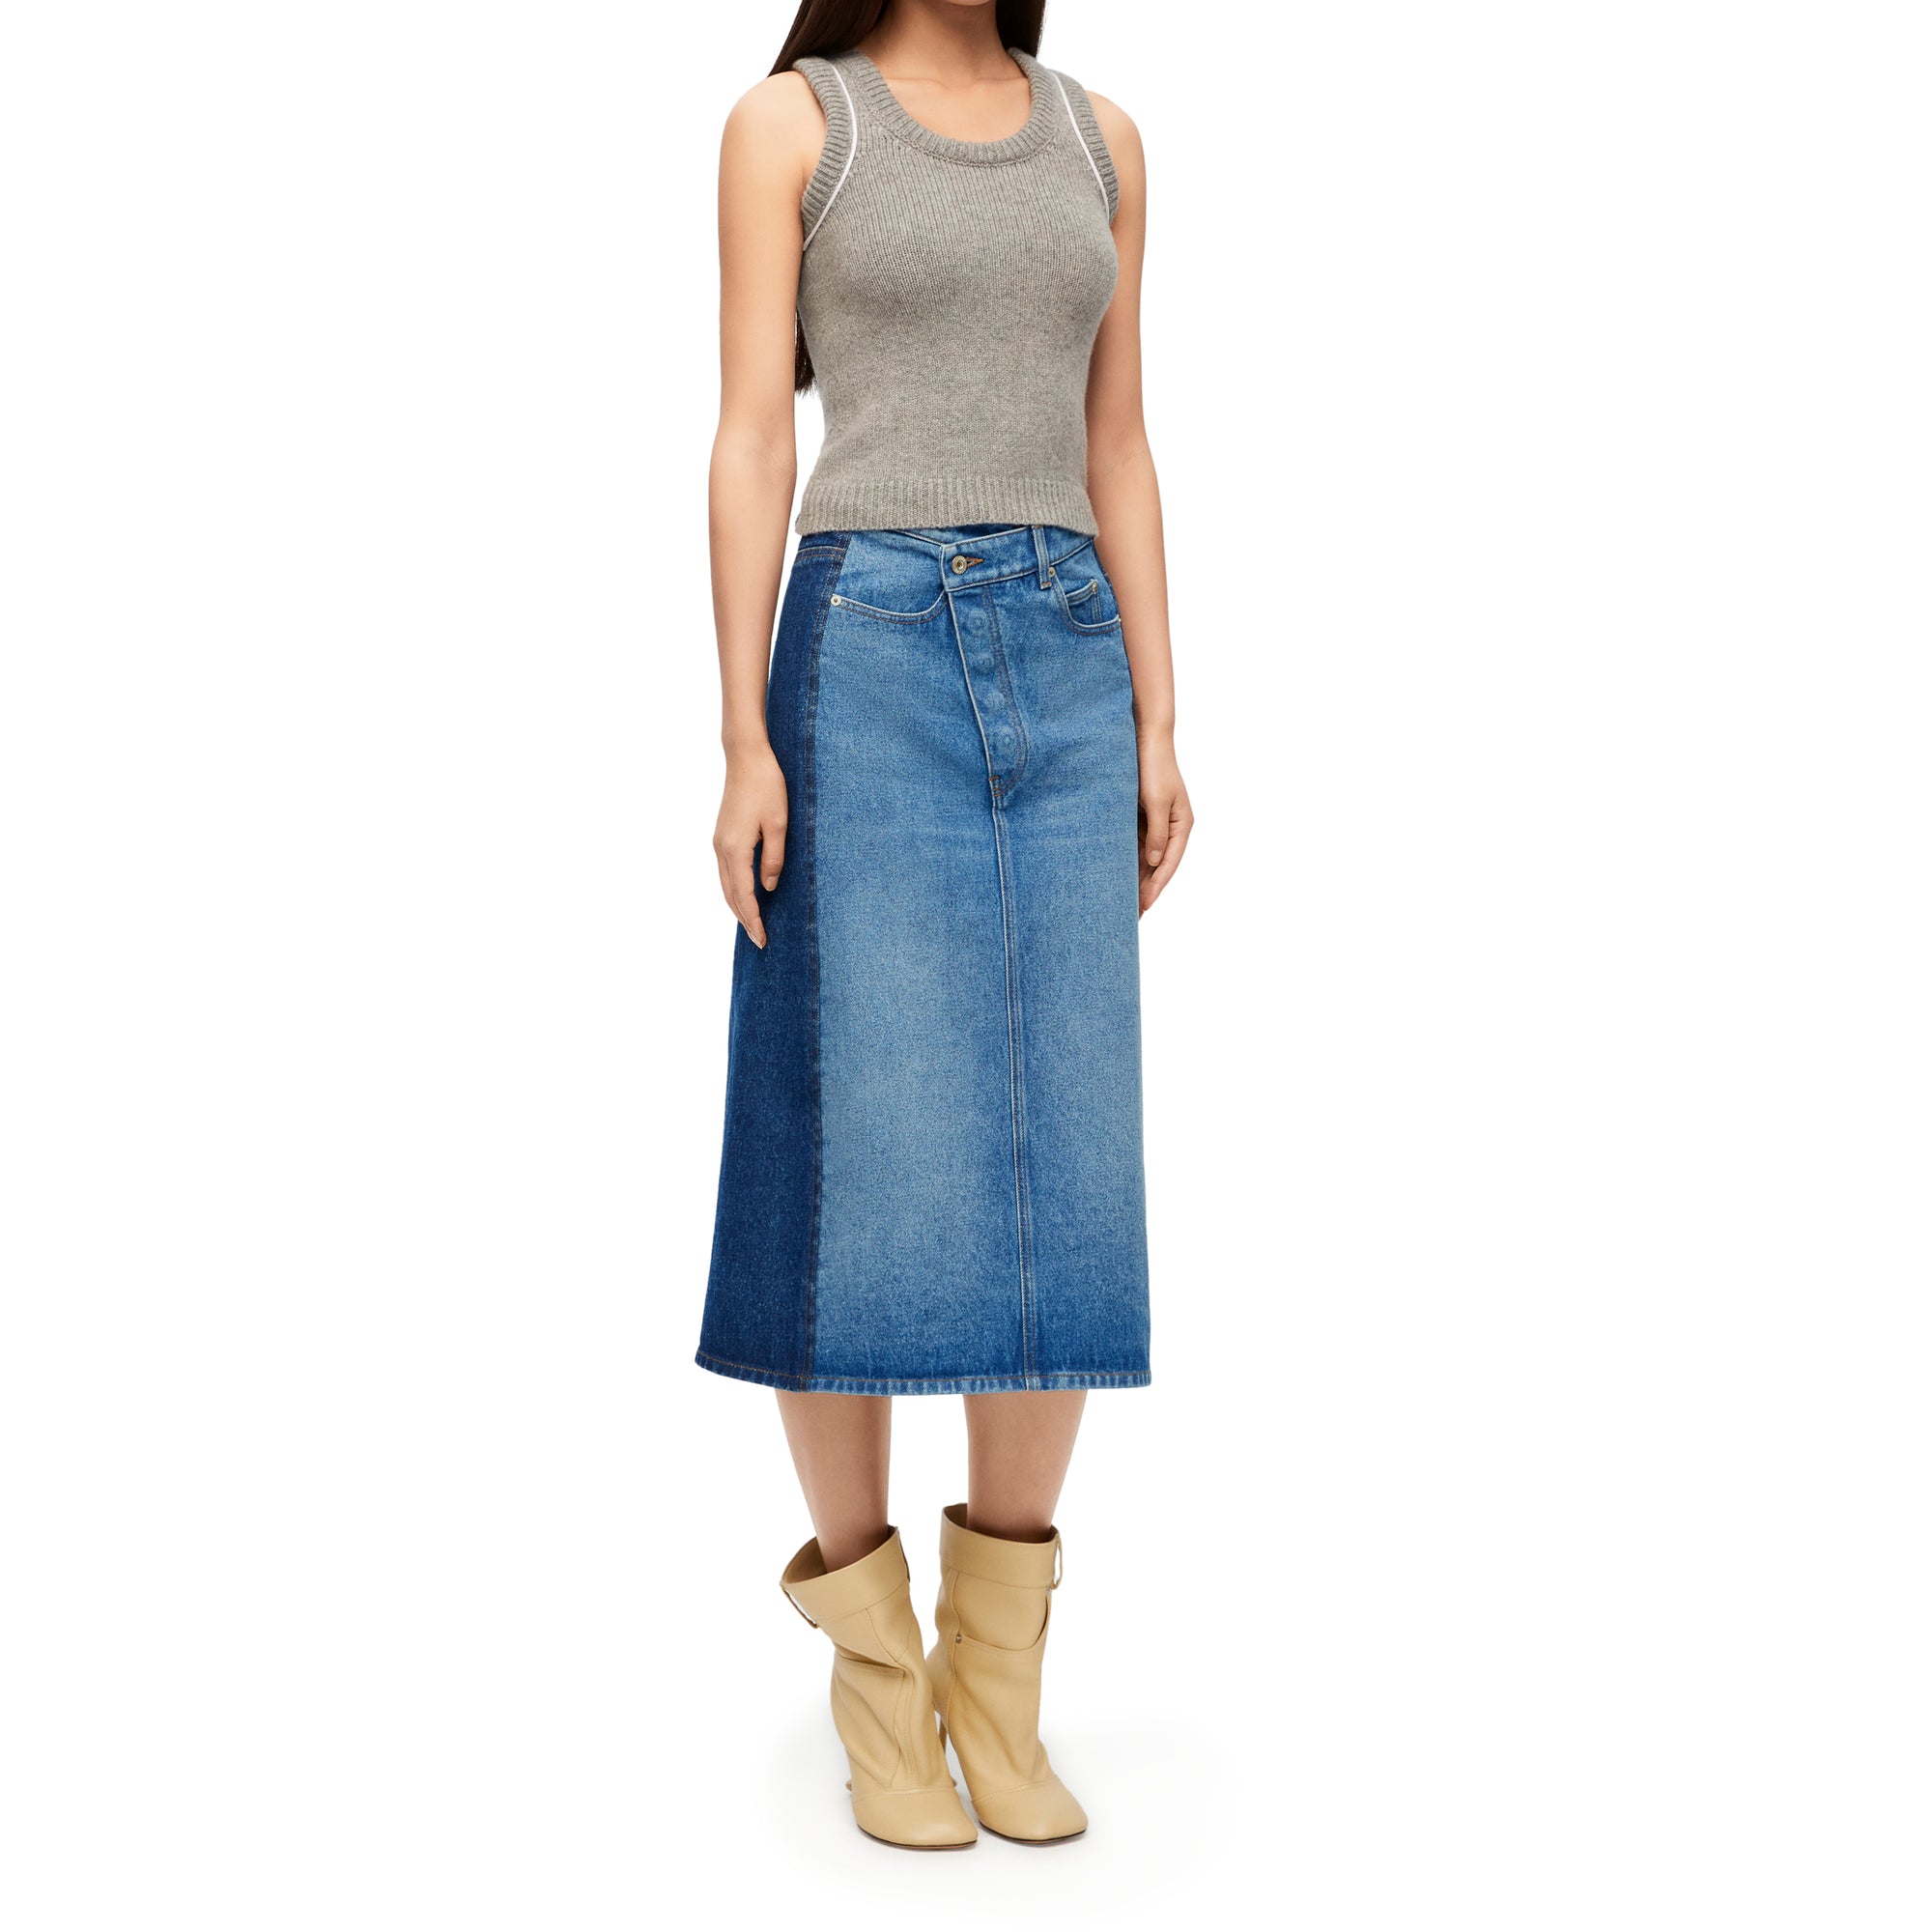 Loewe - Women’s Deconstructed Skirt - (Denim Blue) view 2